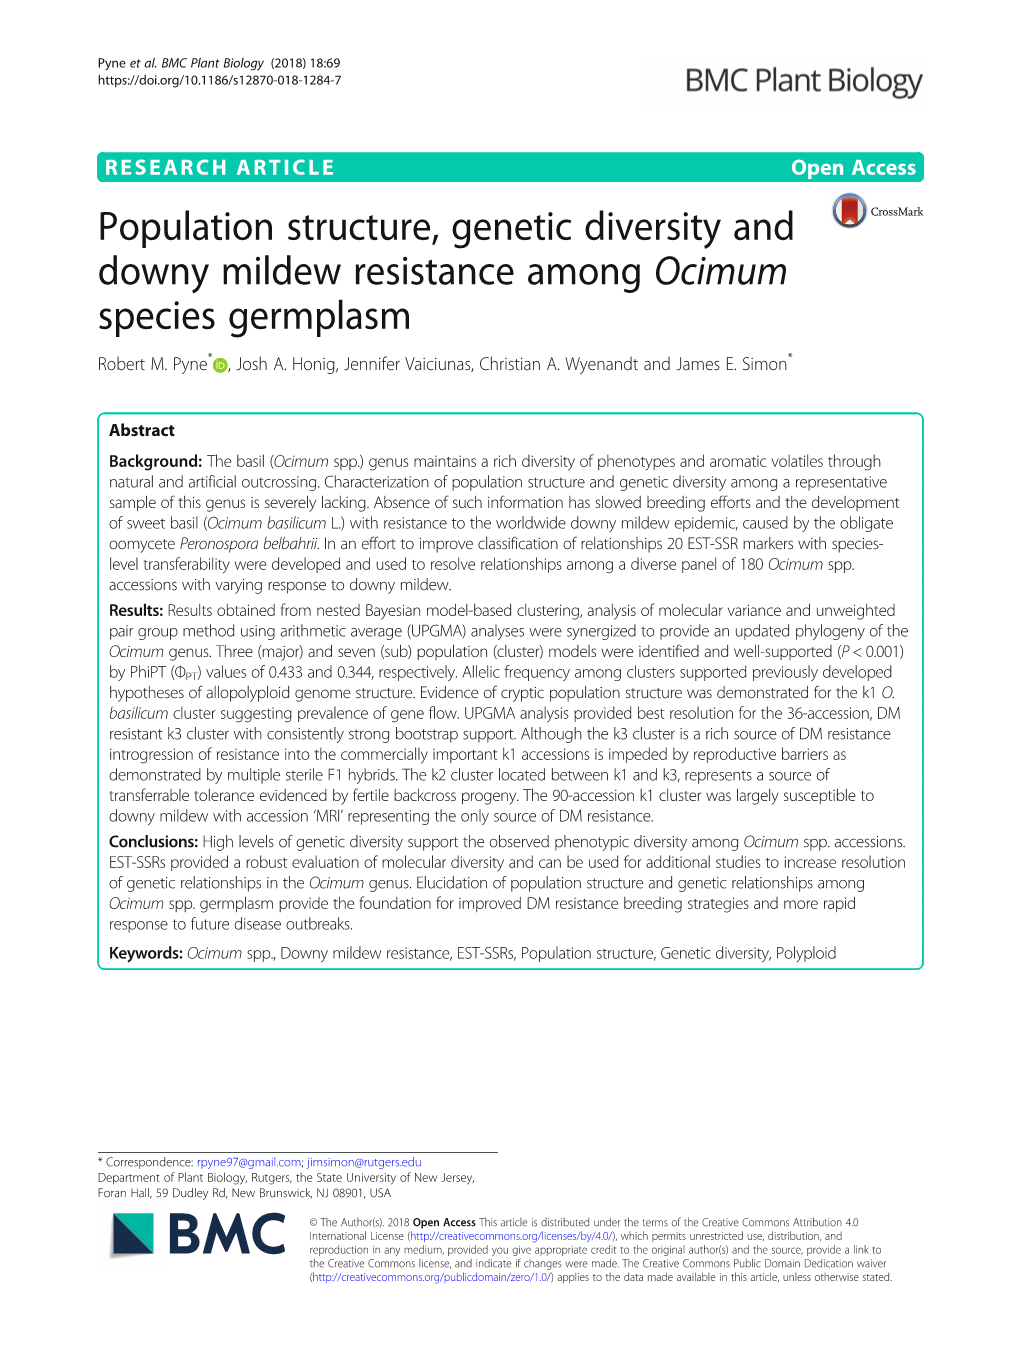 Population Structure, Genetic Diversity and Downy Mildew Resistance Among Ocimum Species Germplasm Robert M